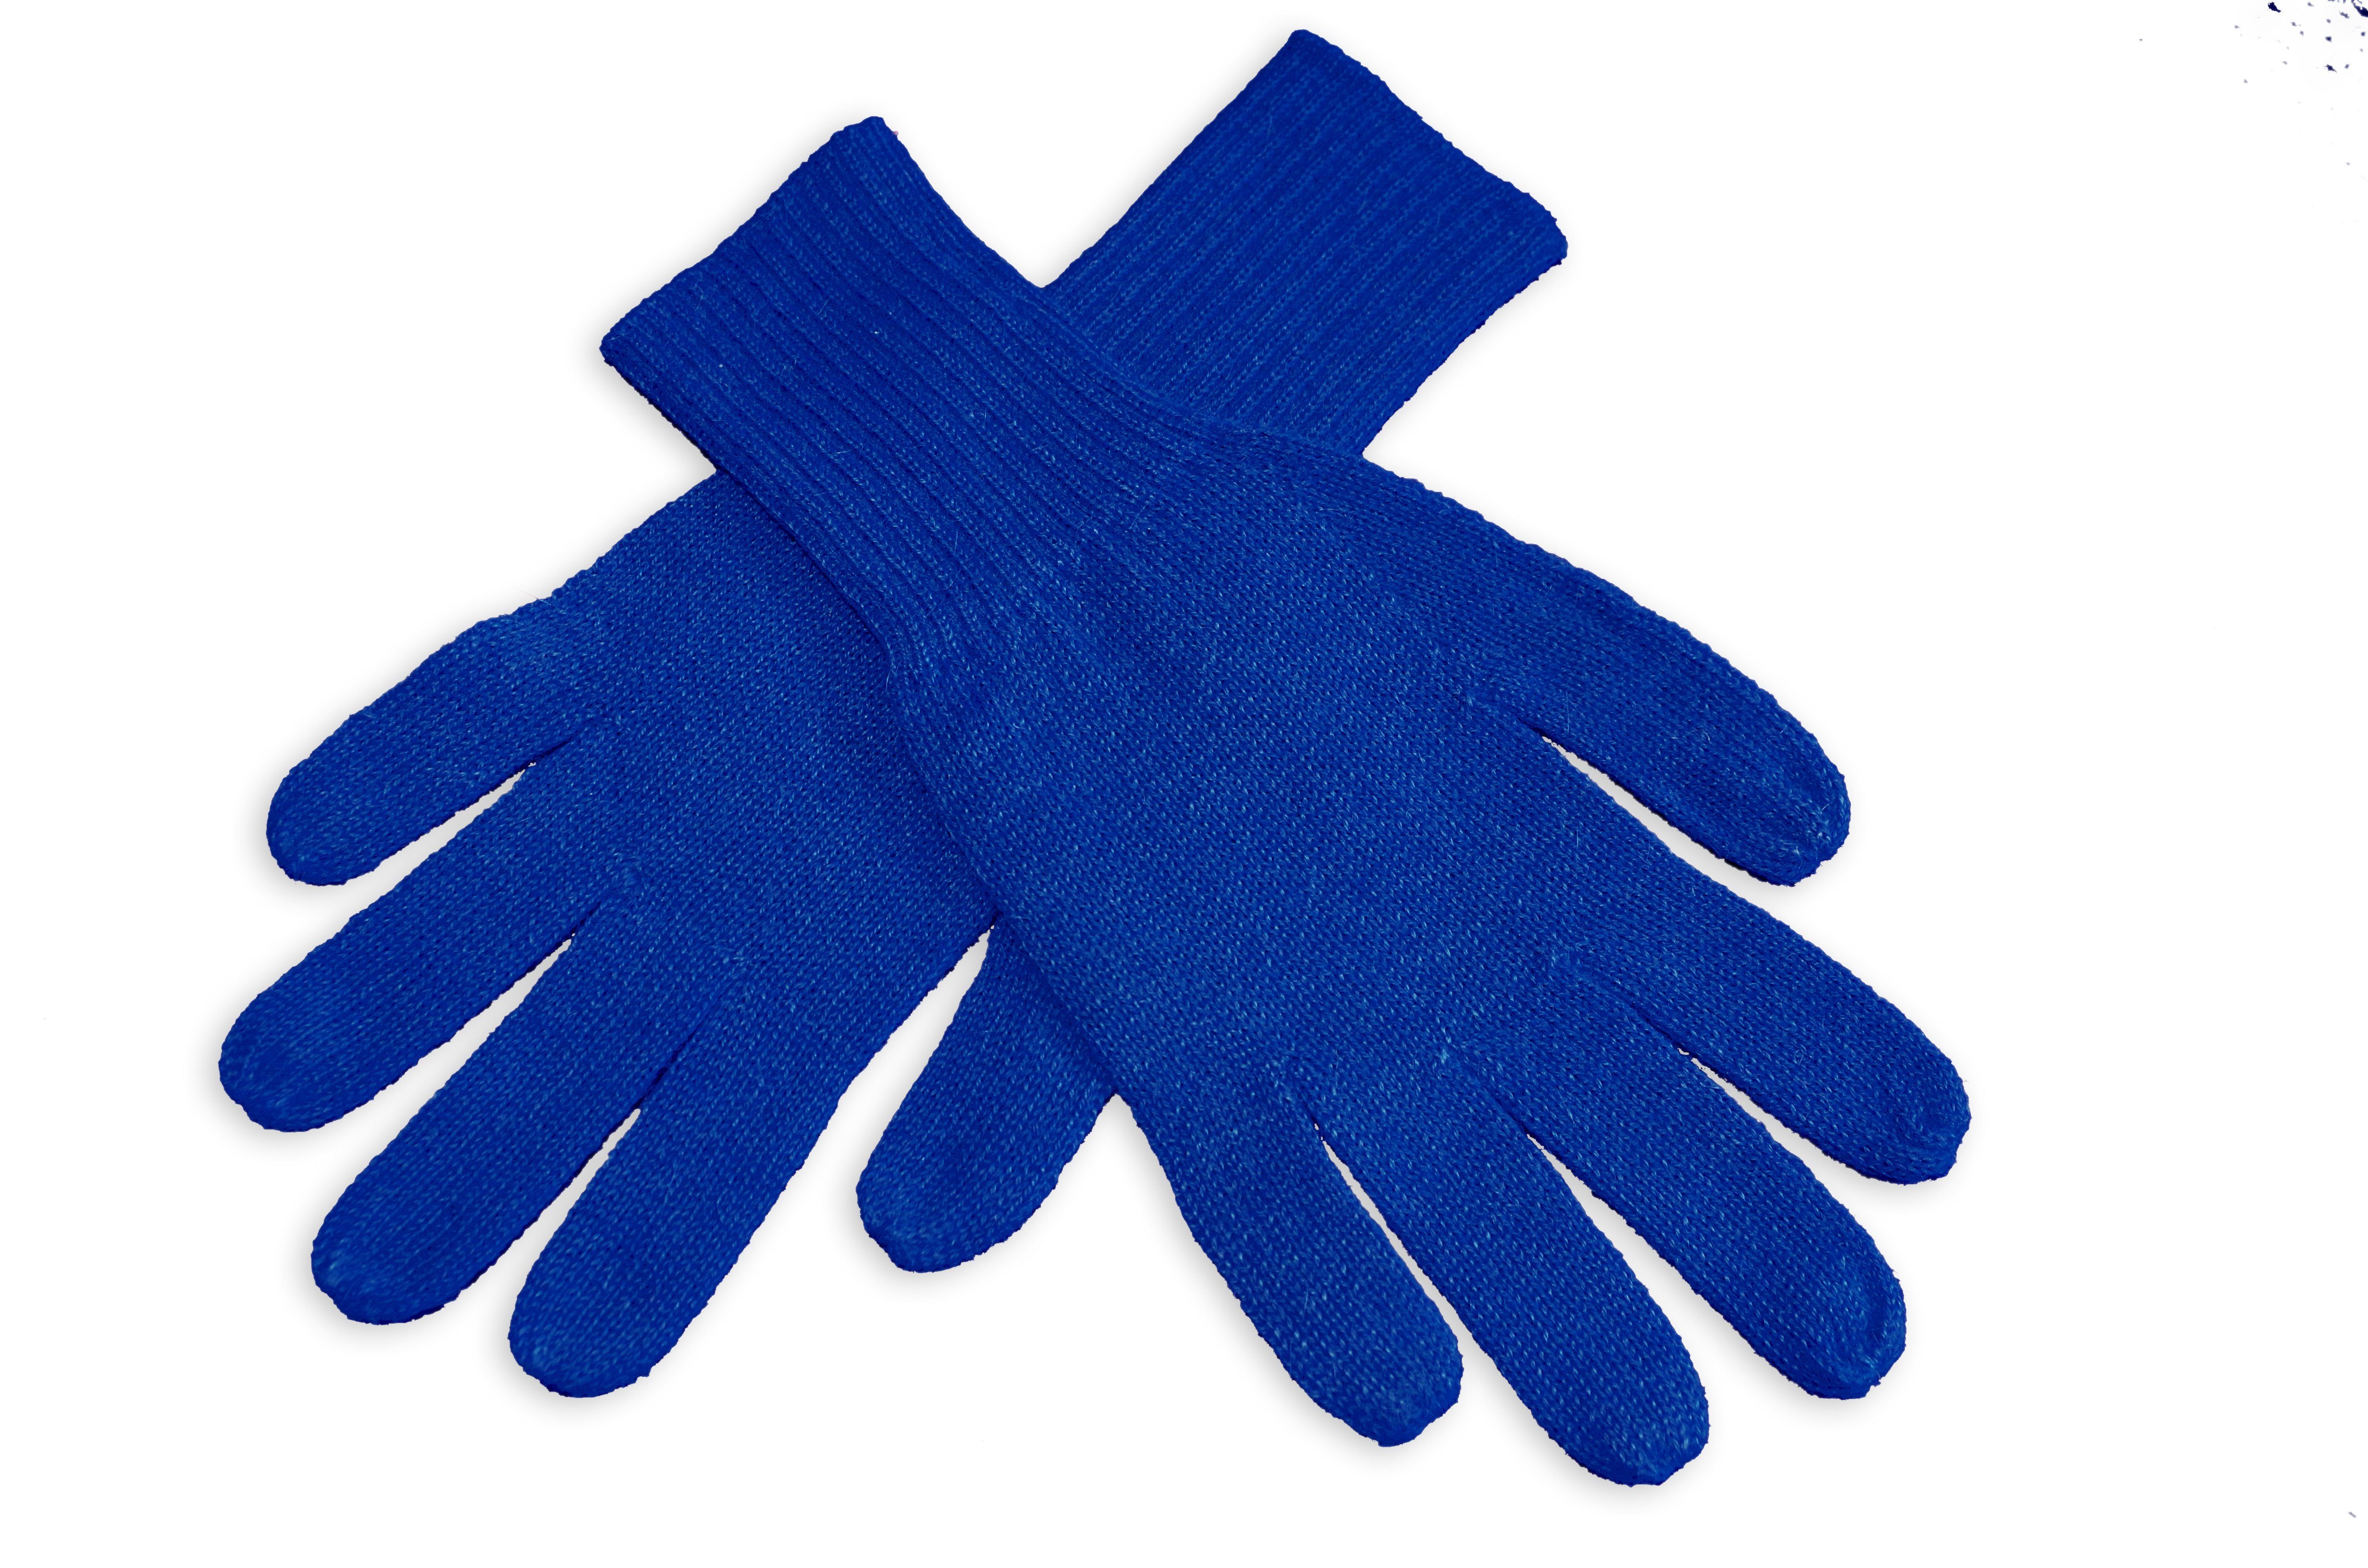 Strickhandschuhe dunkel Alpaka Fingerhandschuhe Posh blau Guantino Gear aus Alpakawolle 100%